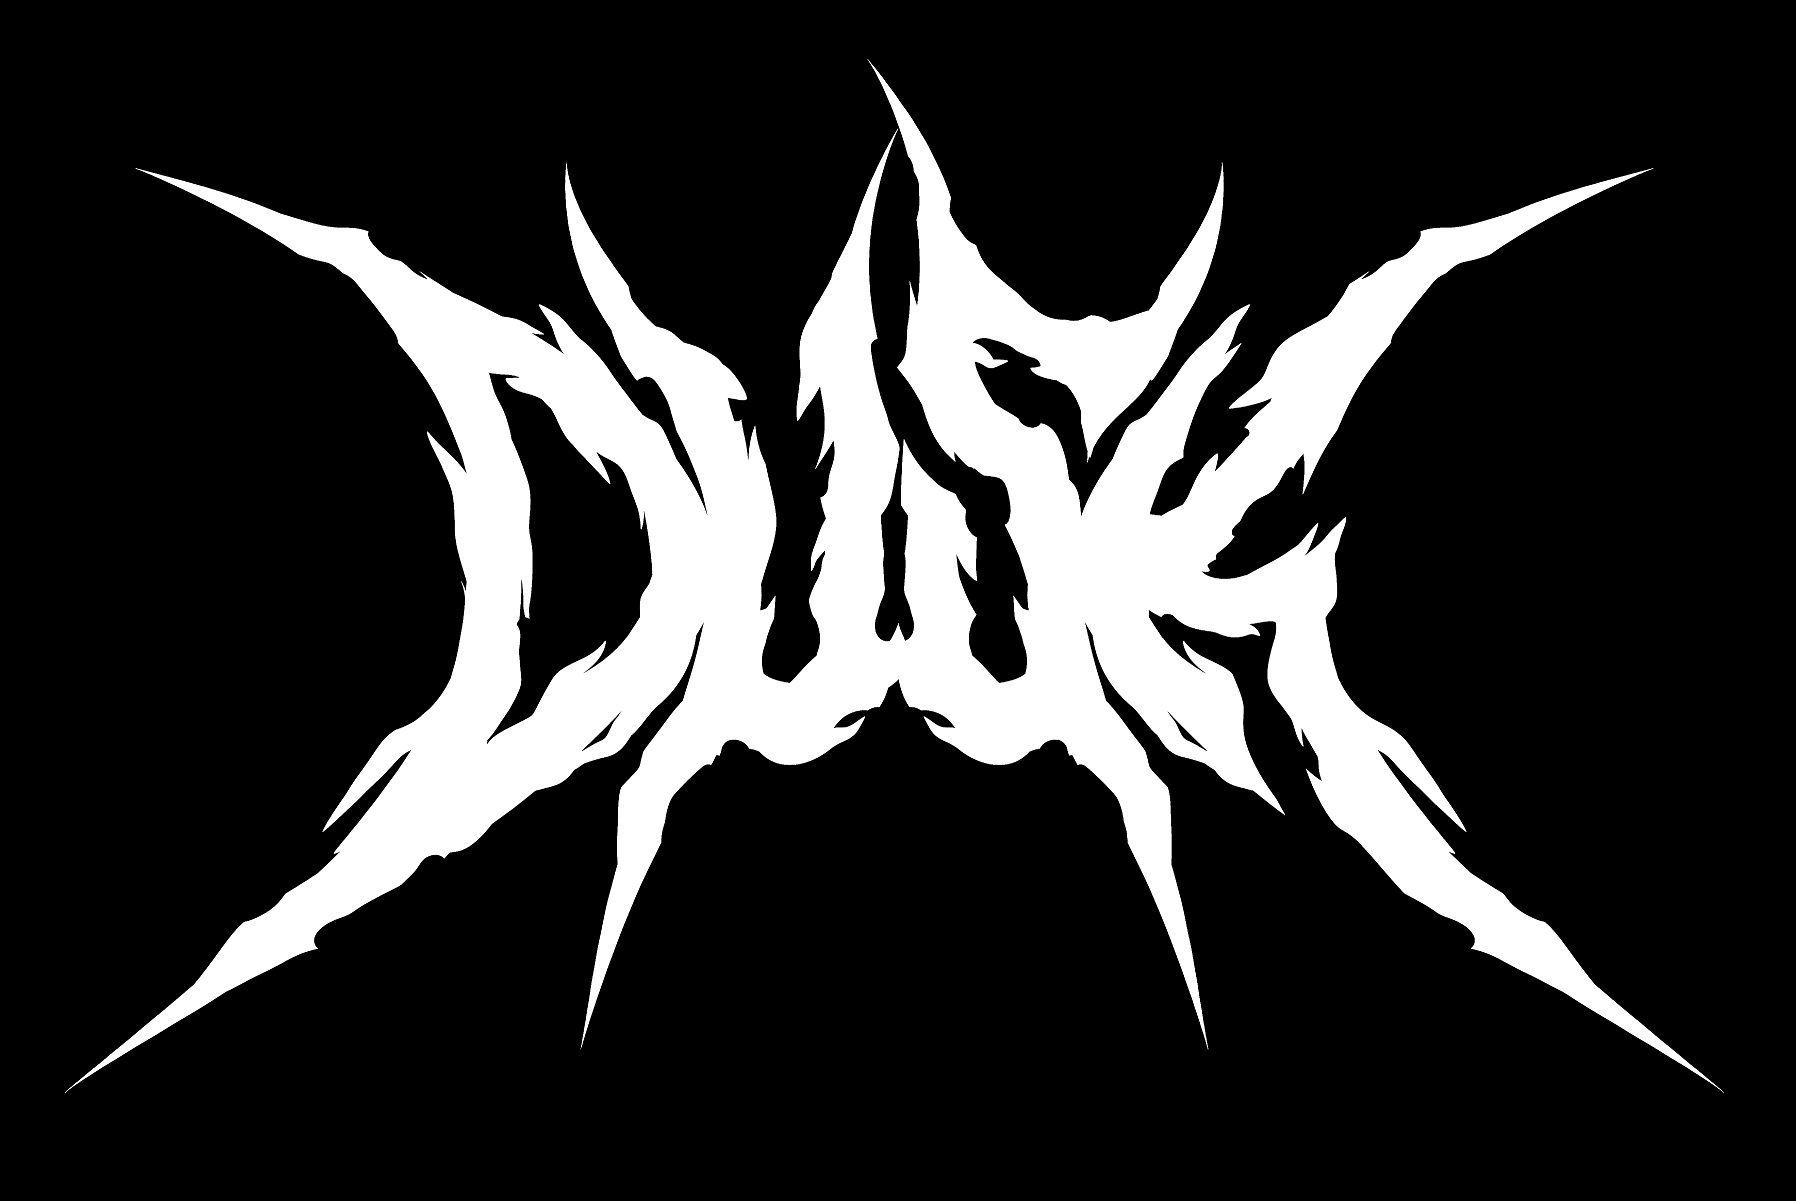 Dusk_Logo_Blk